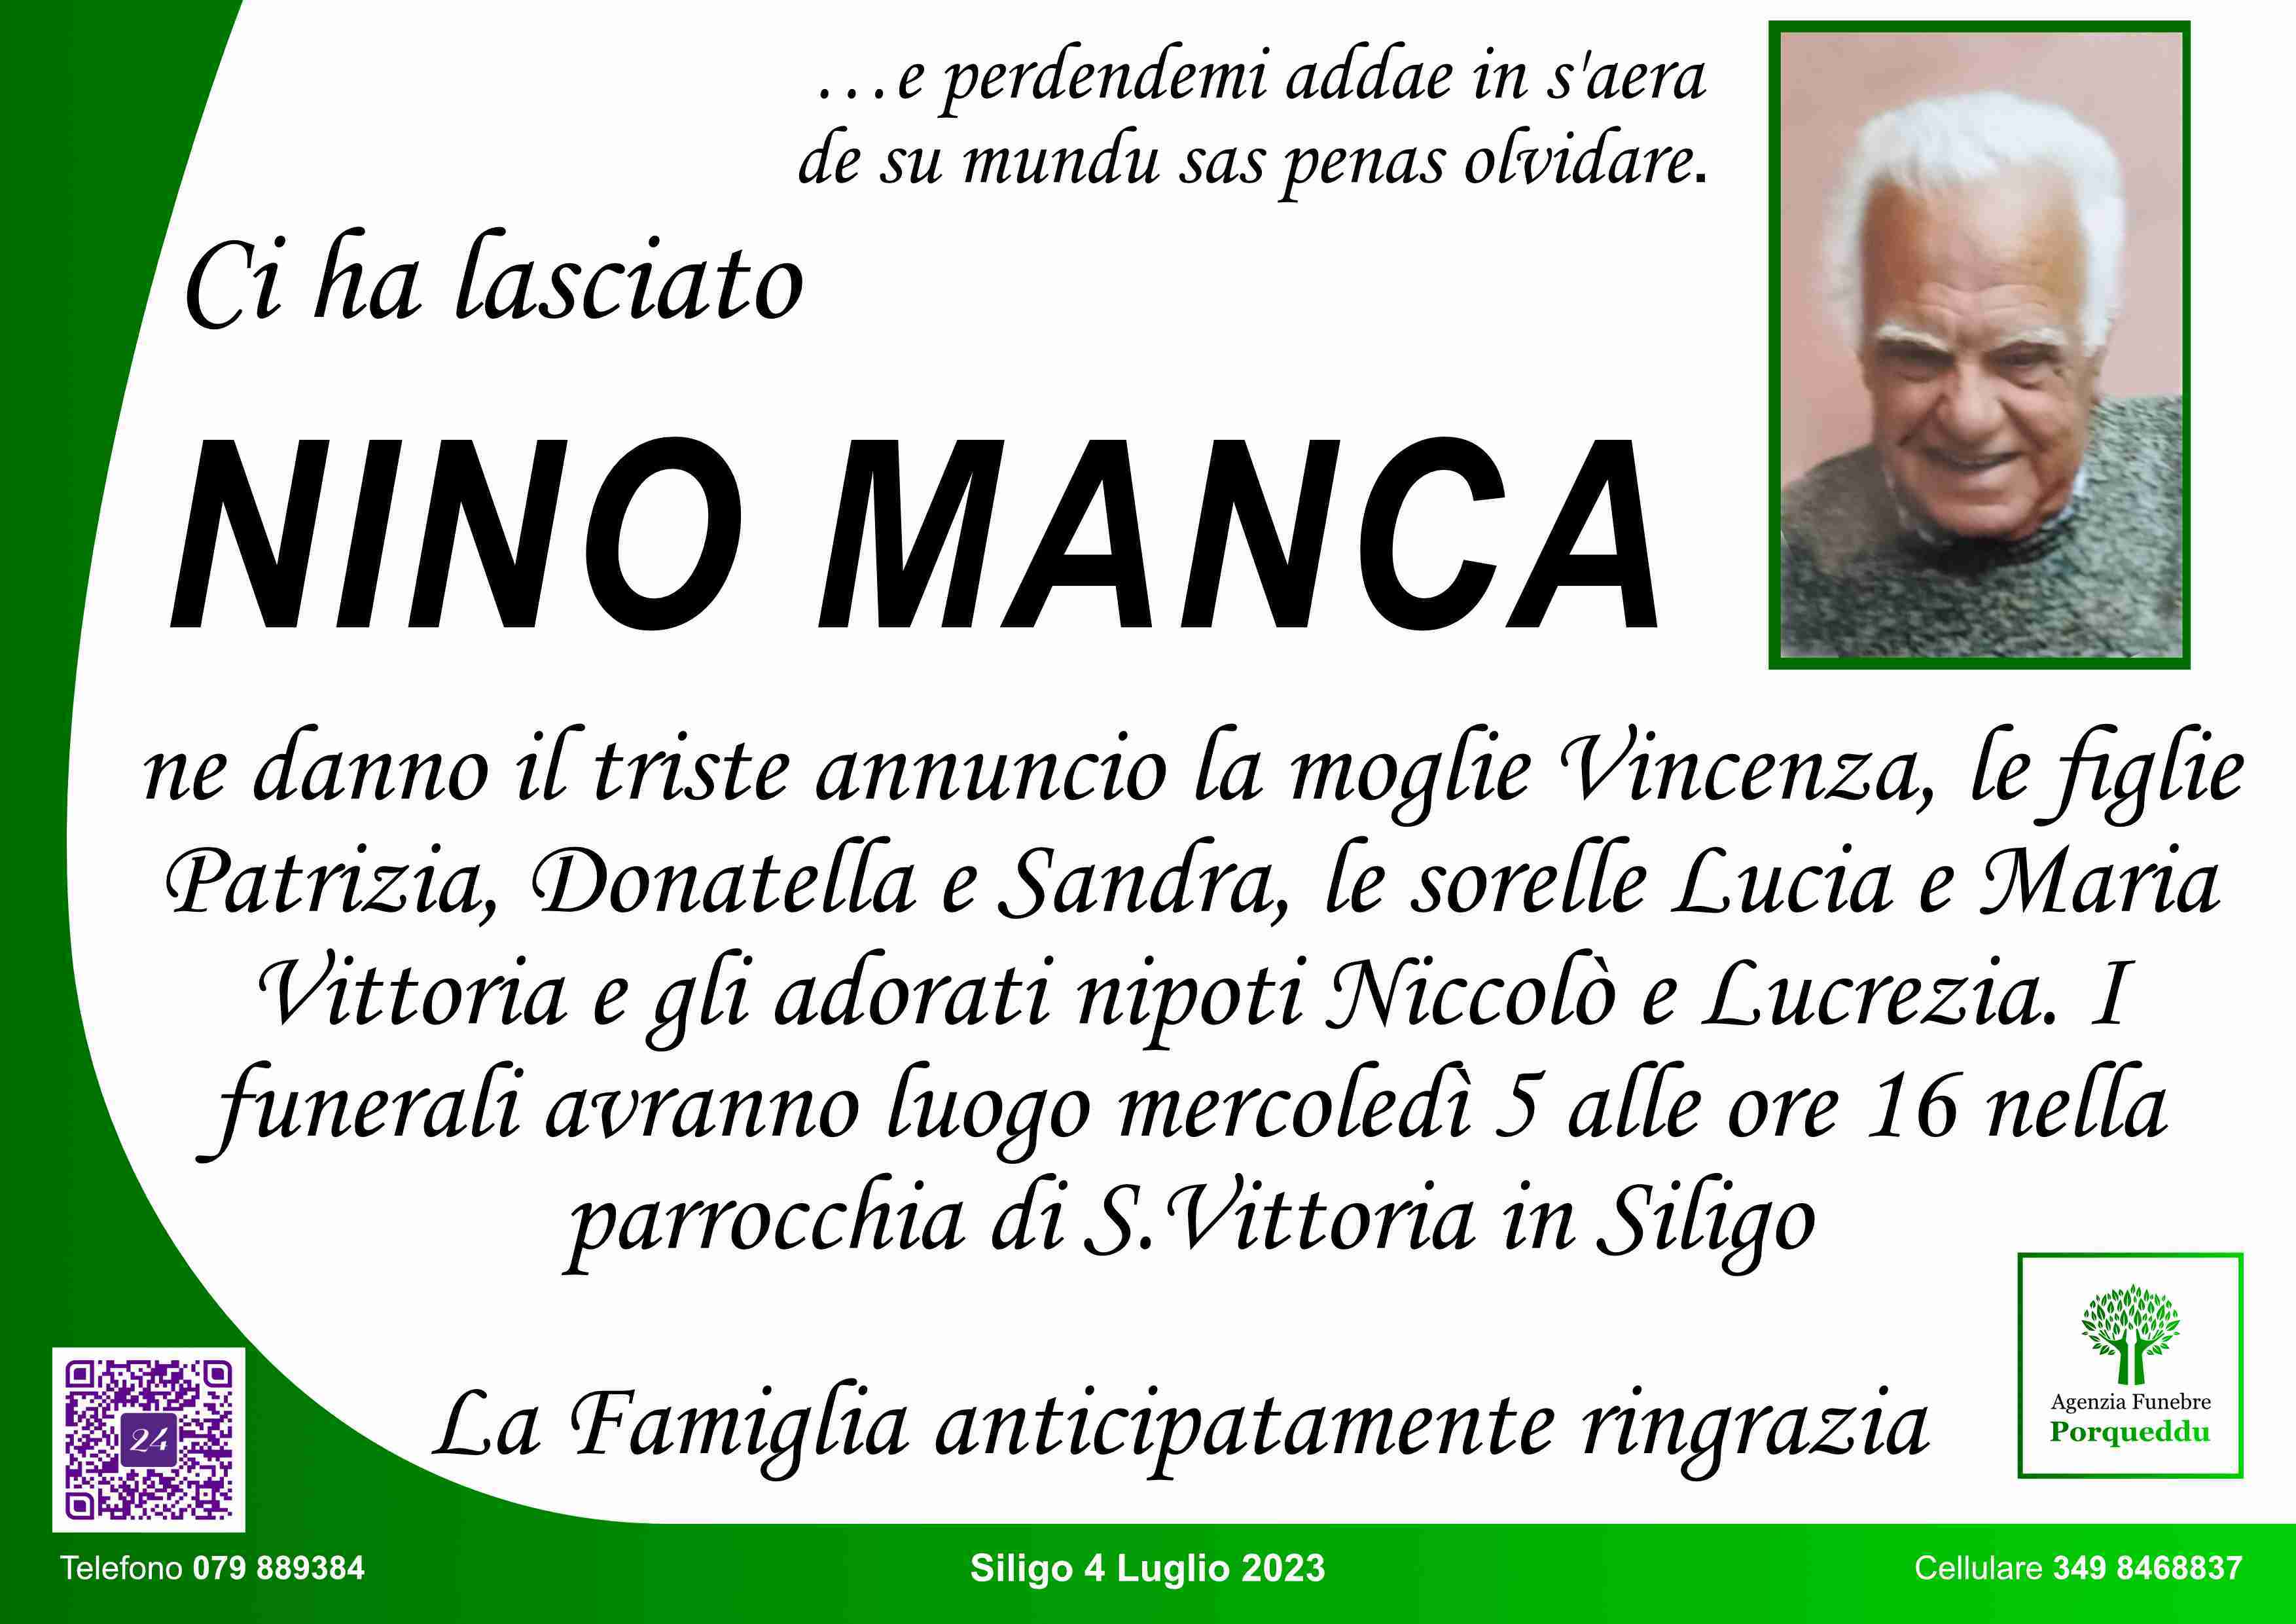 Giovannino Manca